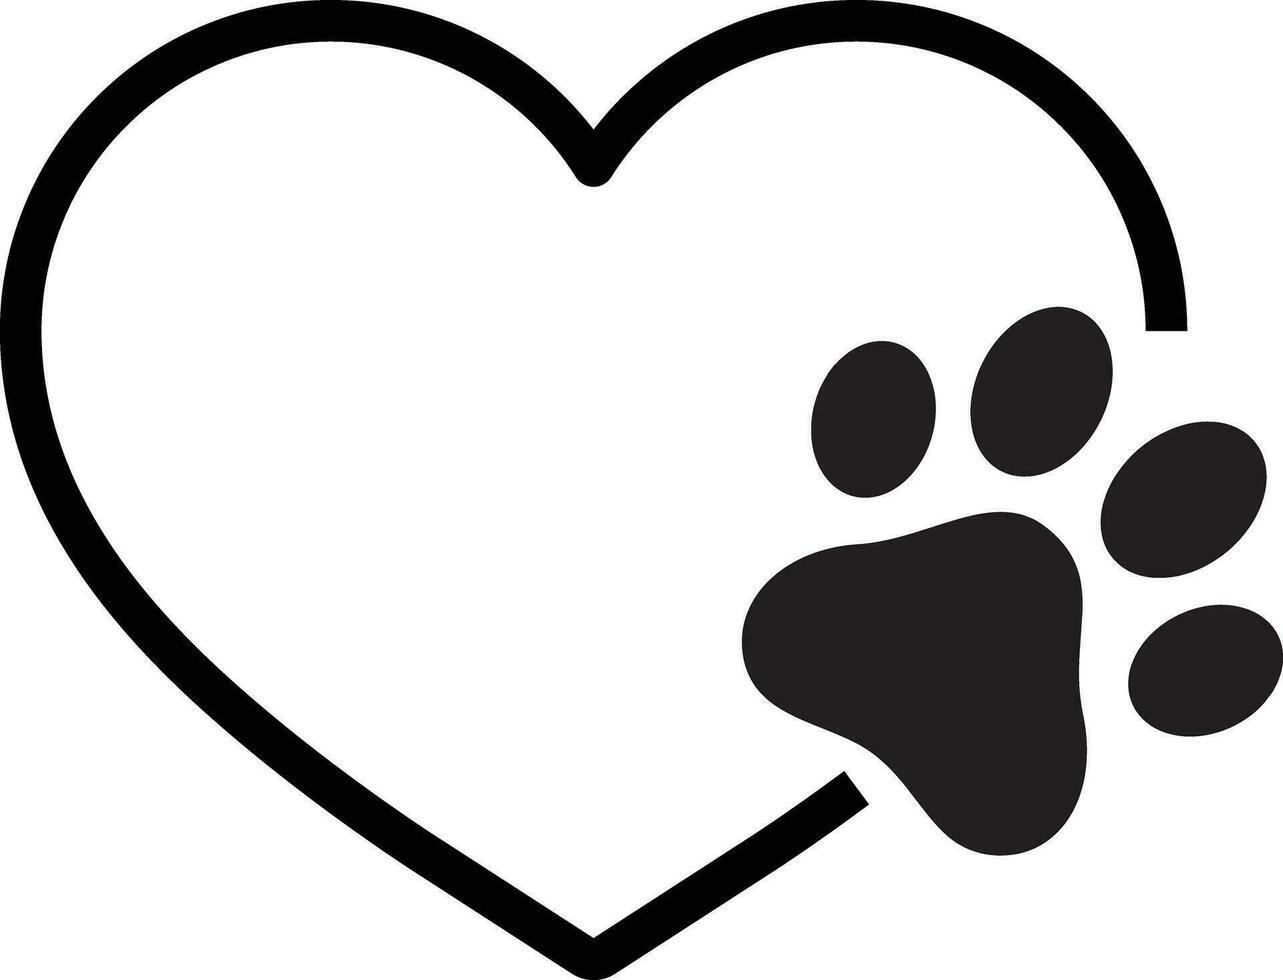 Animal love symbol vector . Paw print with heart . Dog love symbol